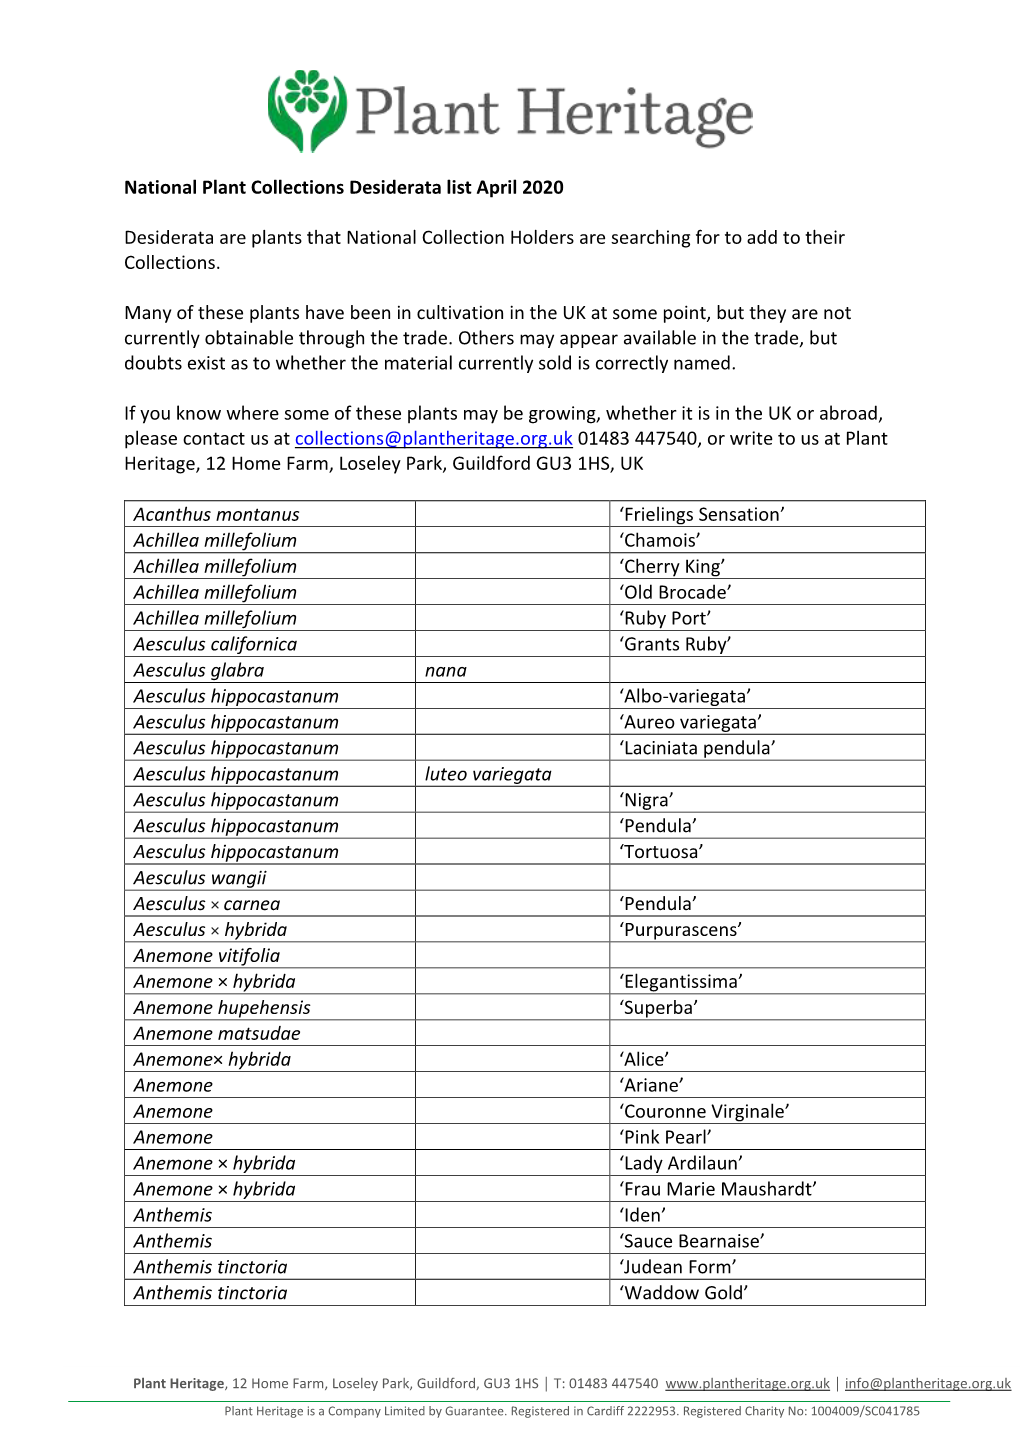 National Plant Collections Desiderata List April 2020 Desiderata Are Plants